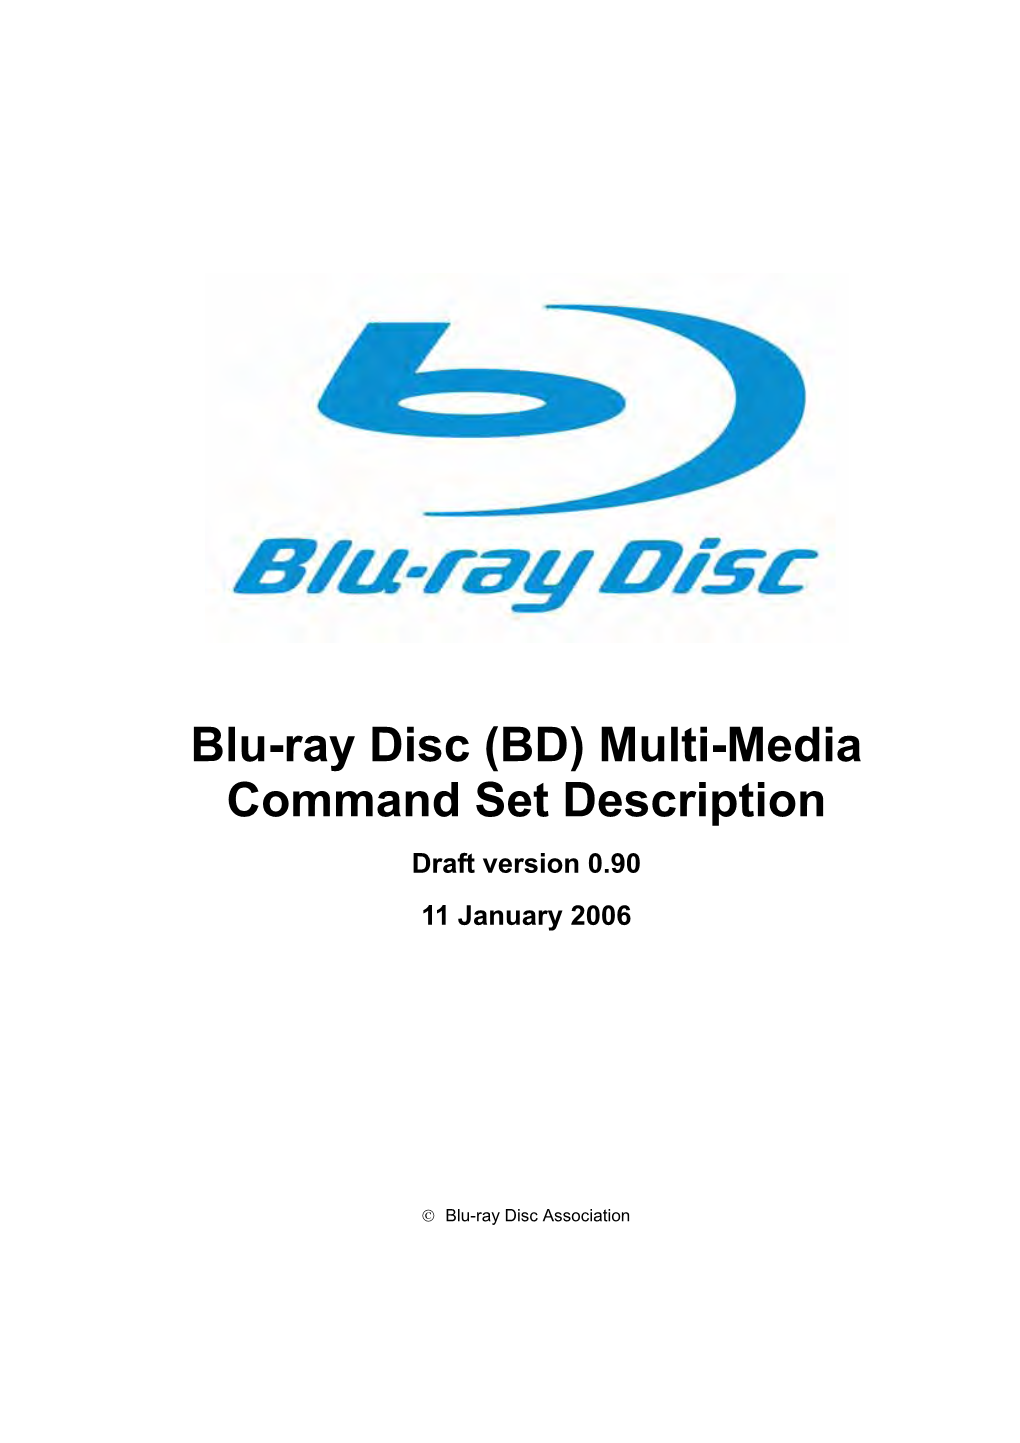 Blu-Ray Disc (BD) Multi-Media Command Set Description Draft Version 0.90 11 January 2006